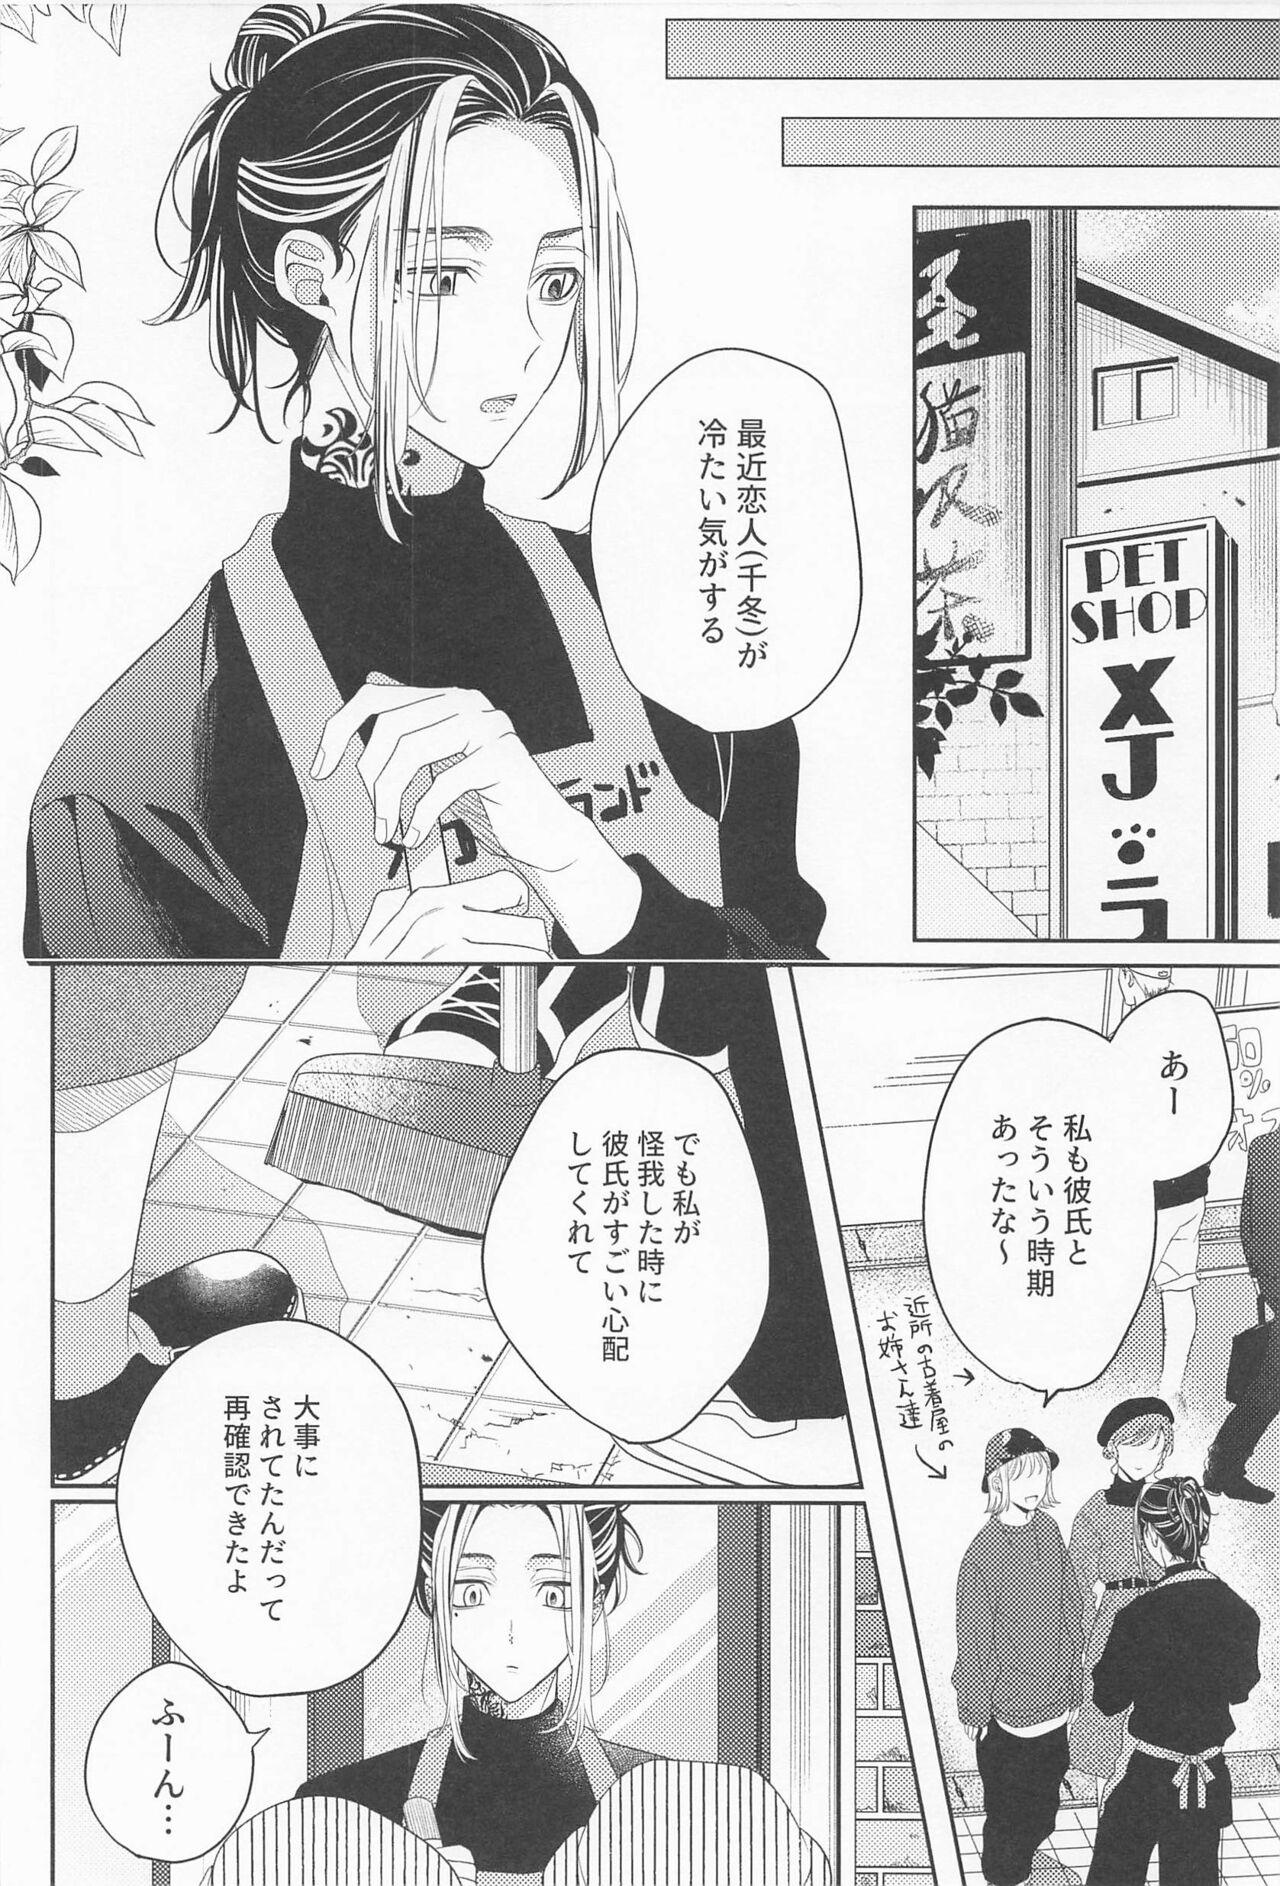 Peludo sukidakarashimpaishite - Tokyo revengers Amante - Page 5